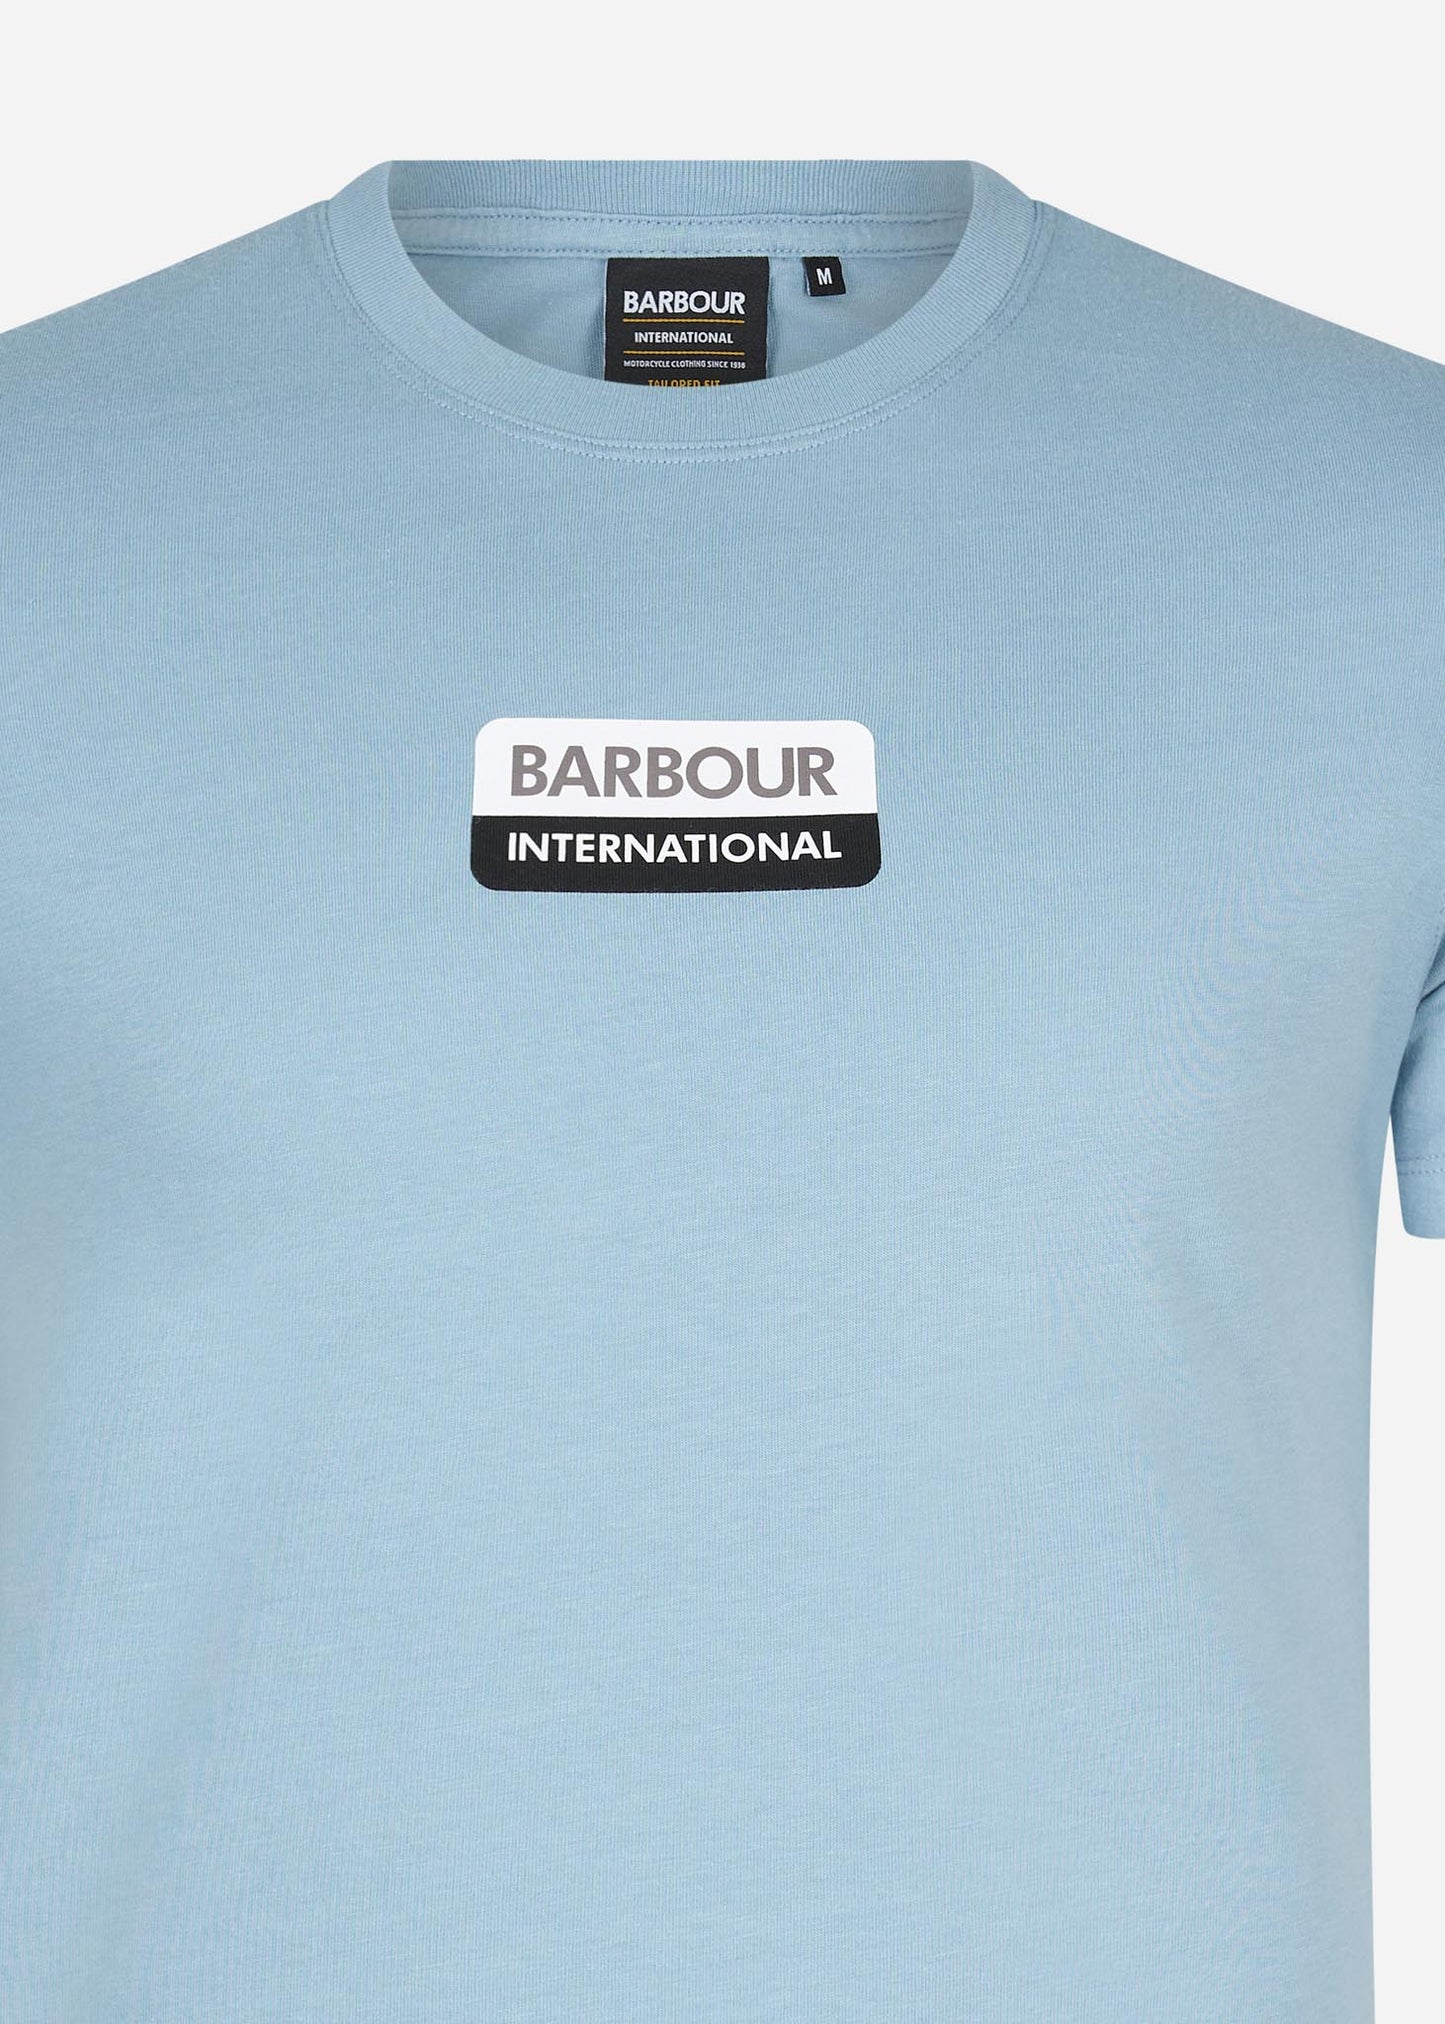 barbour international powder blue t-shirt